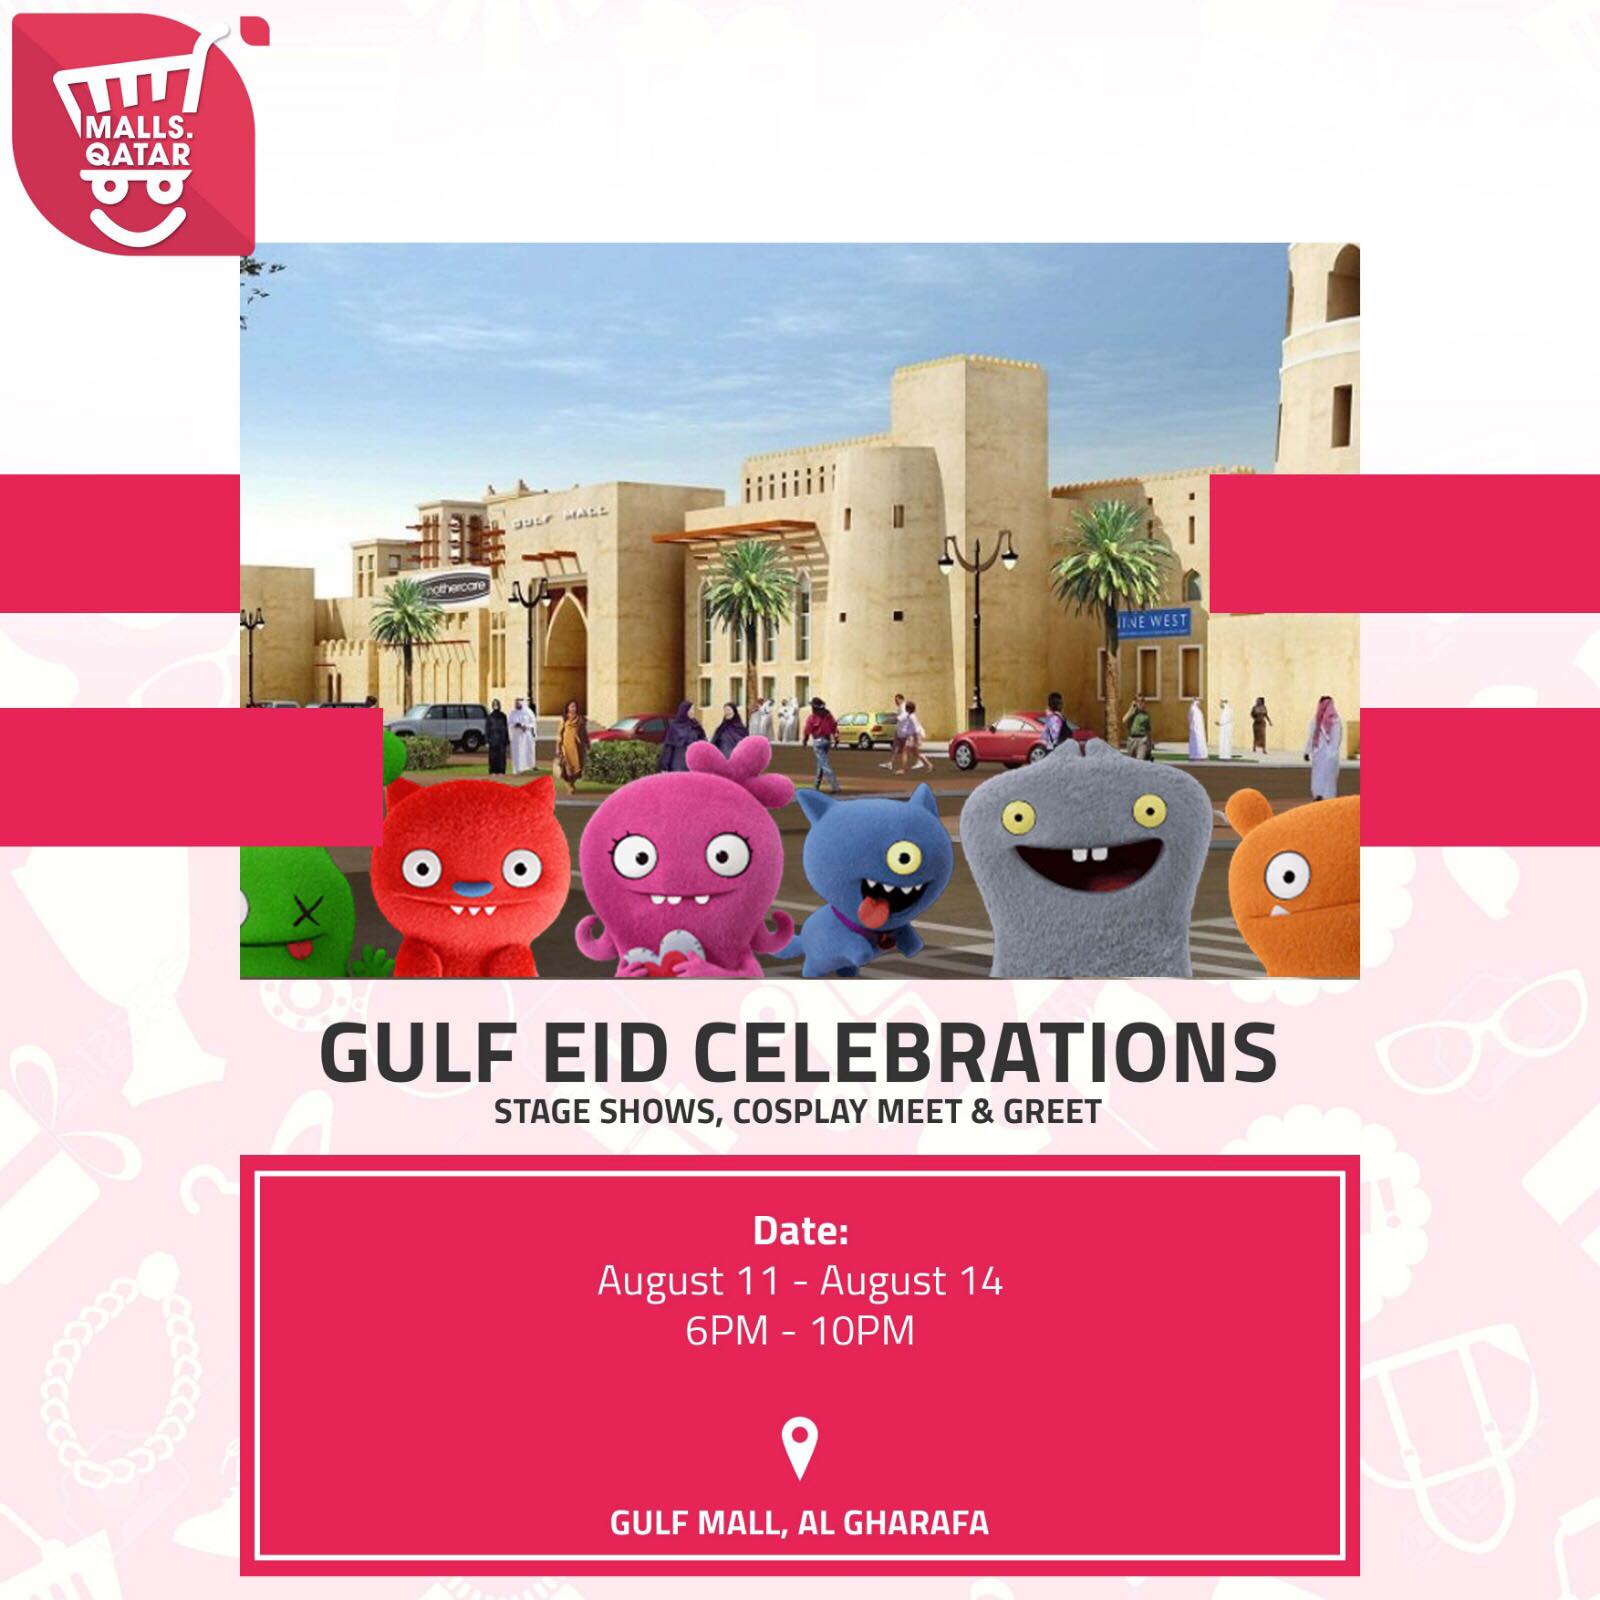 Eid Celebrations in Qatar What's Goin On Qatar